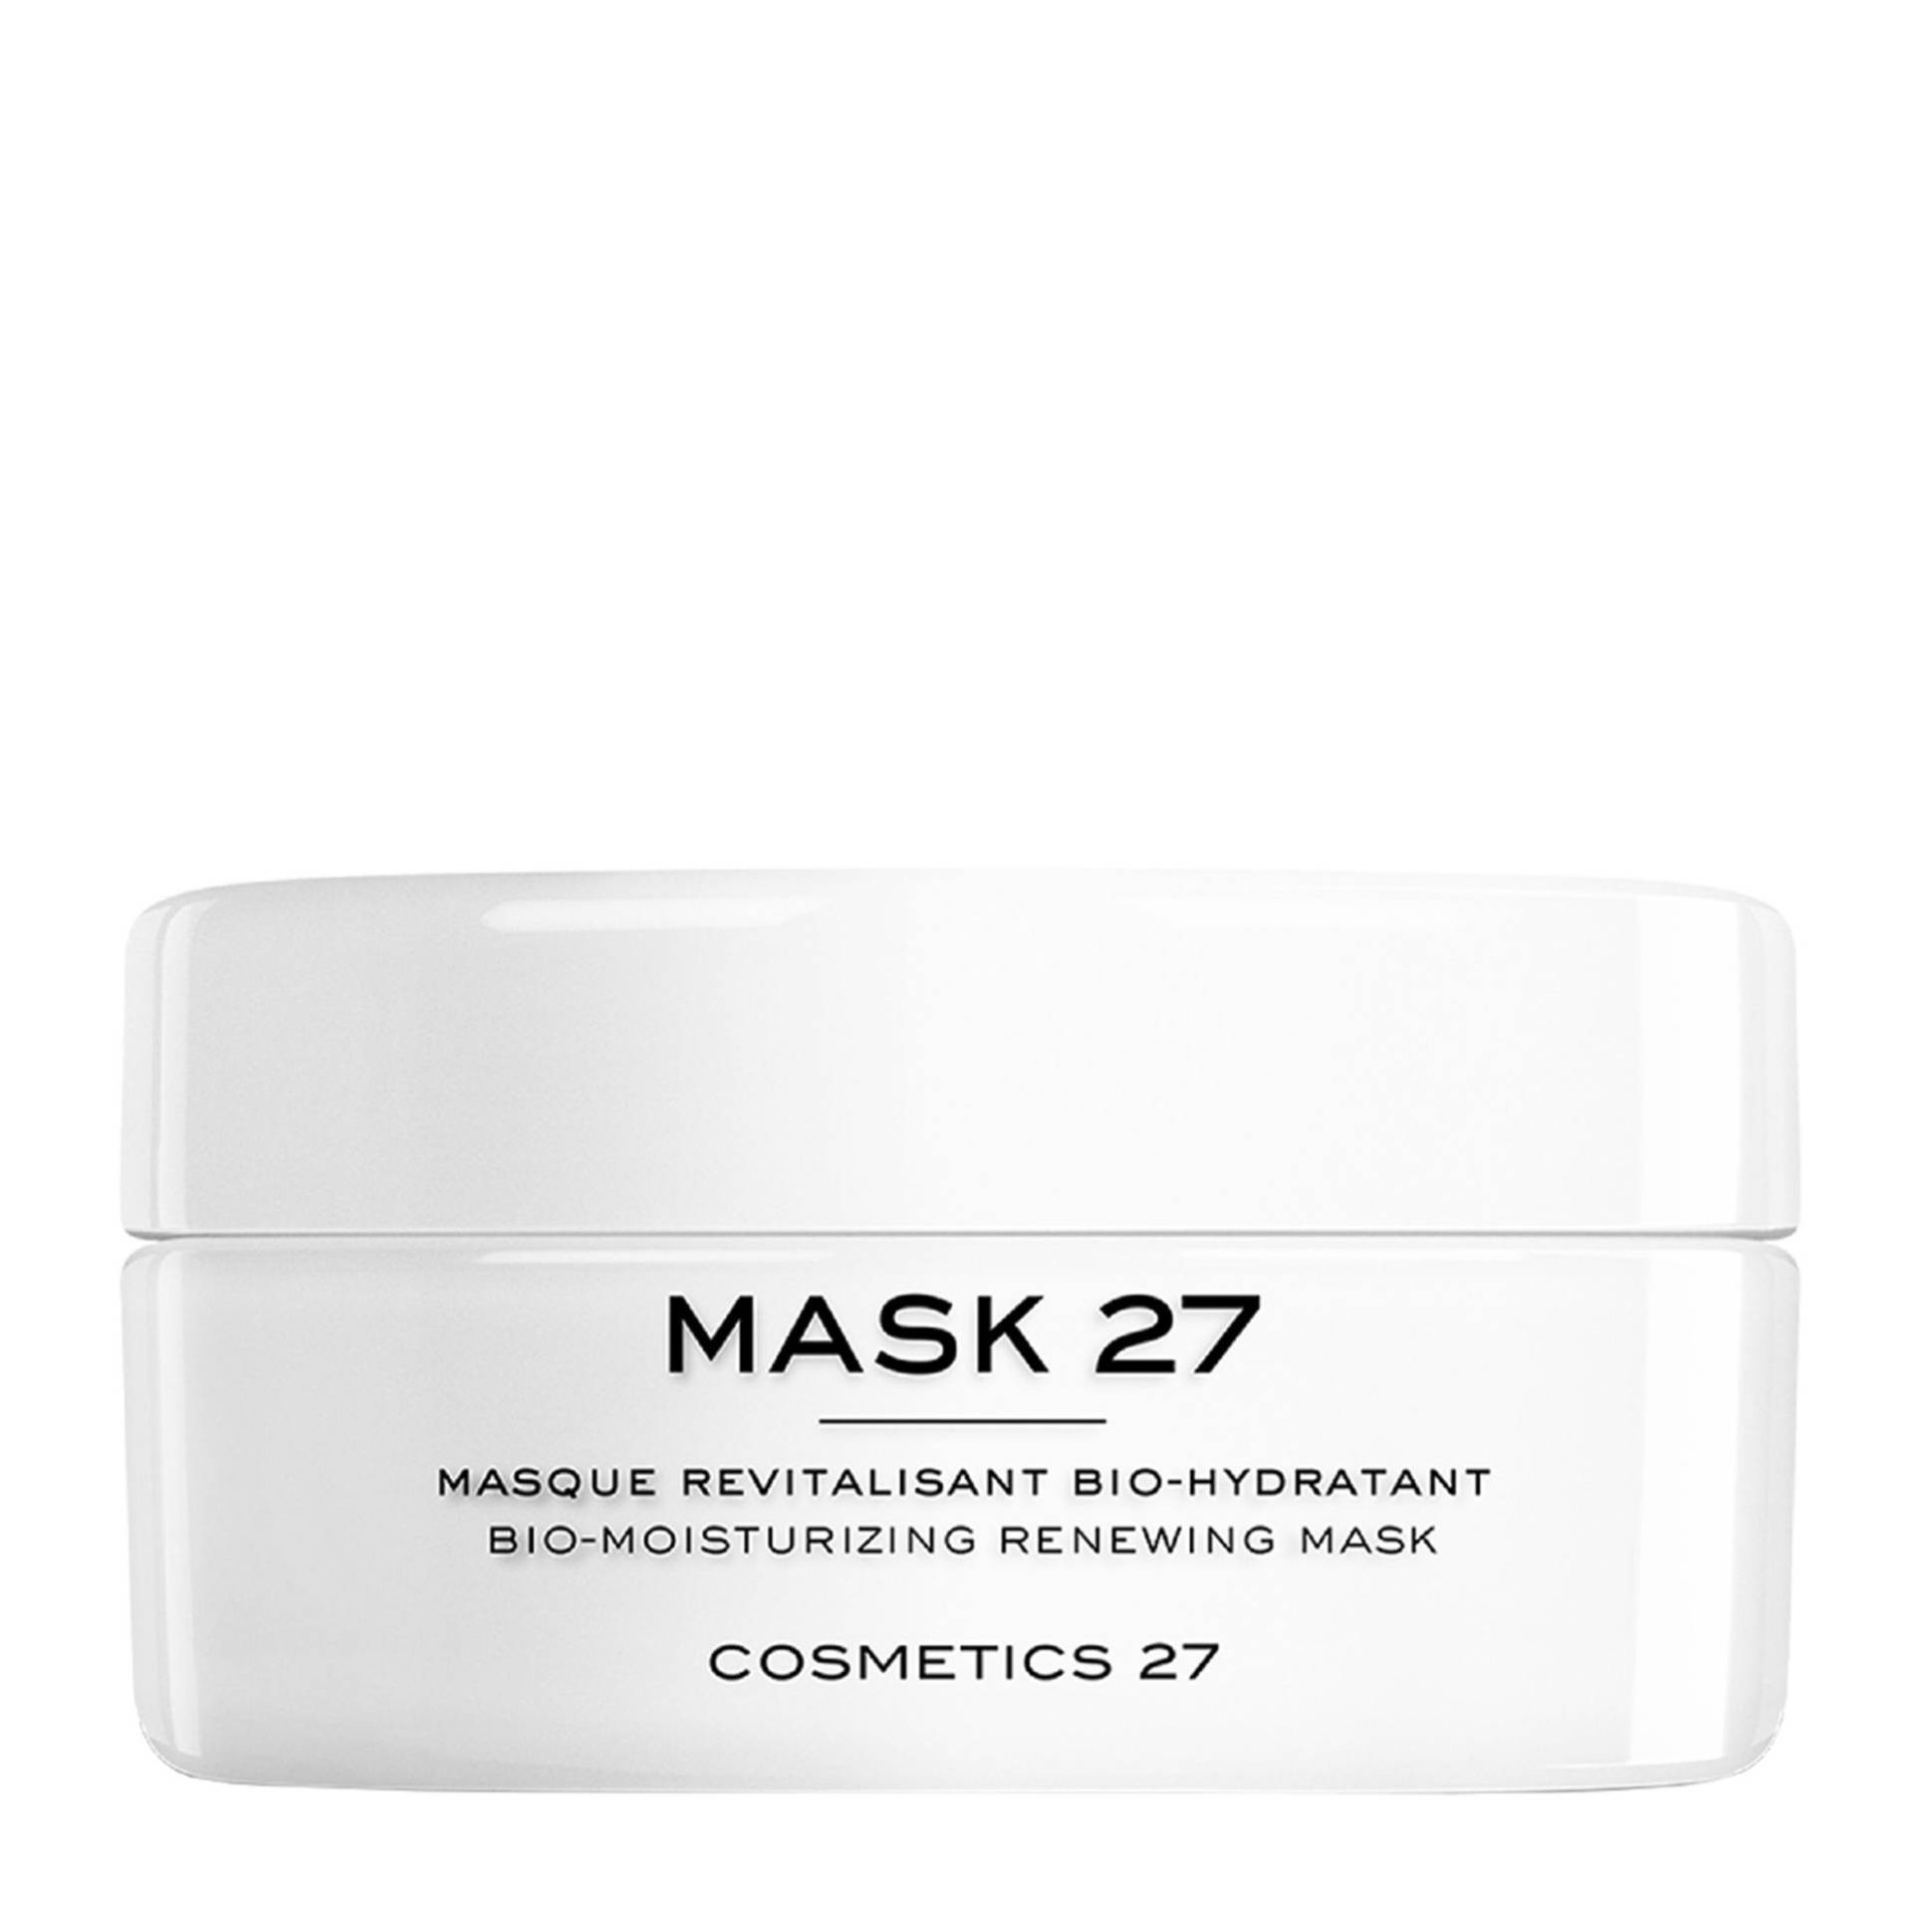 Cosmetics 27 PRO Mask 27 - Увлажняющая восстанавливающая биомаска